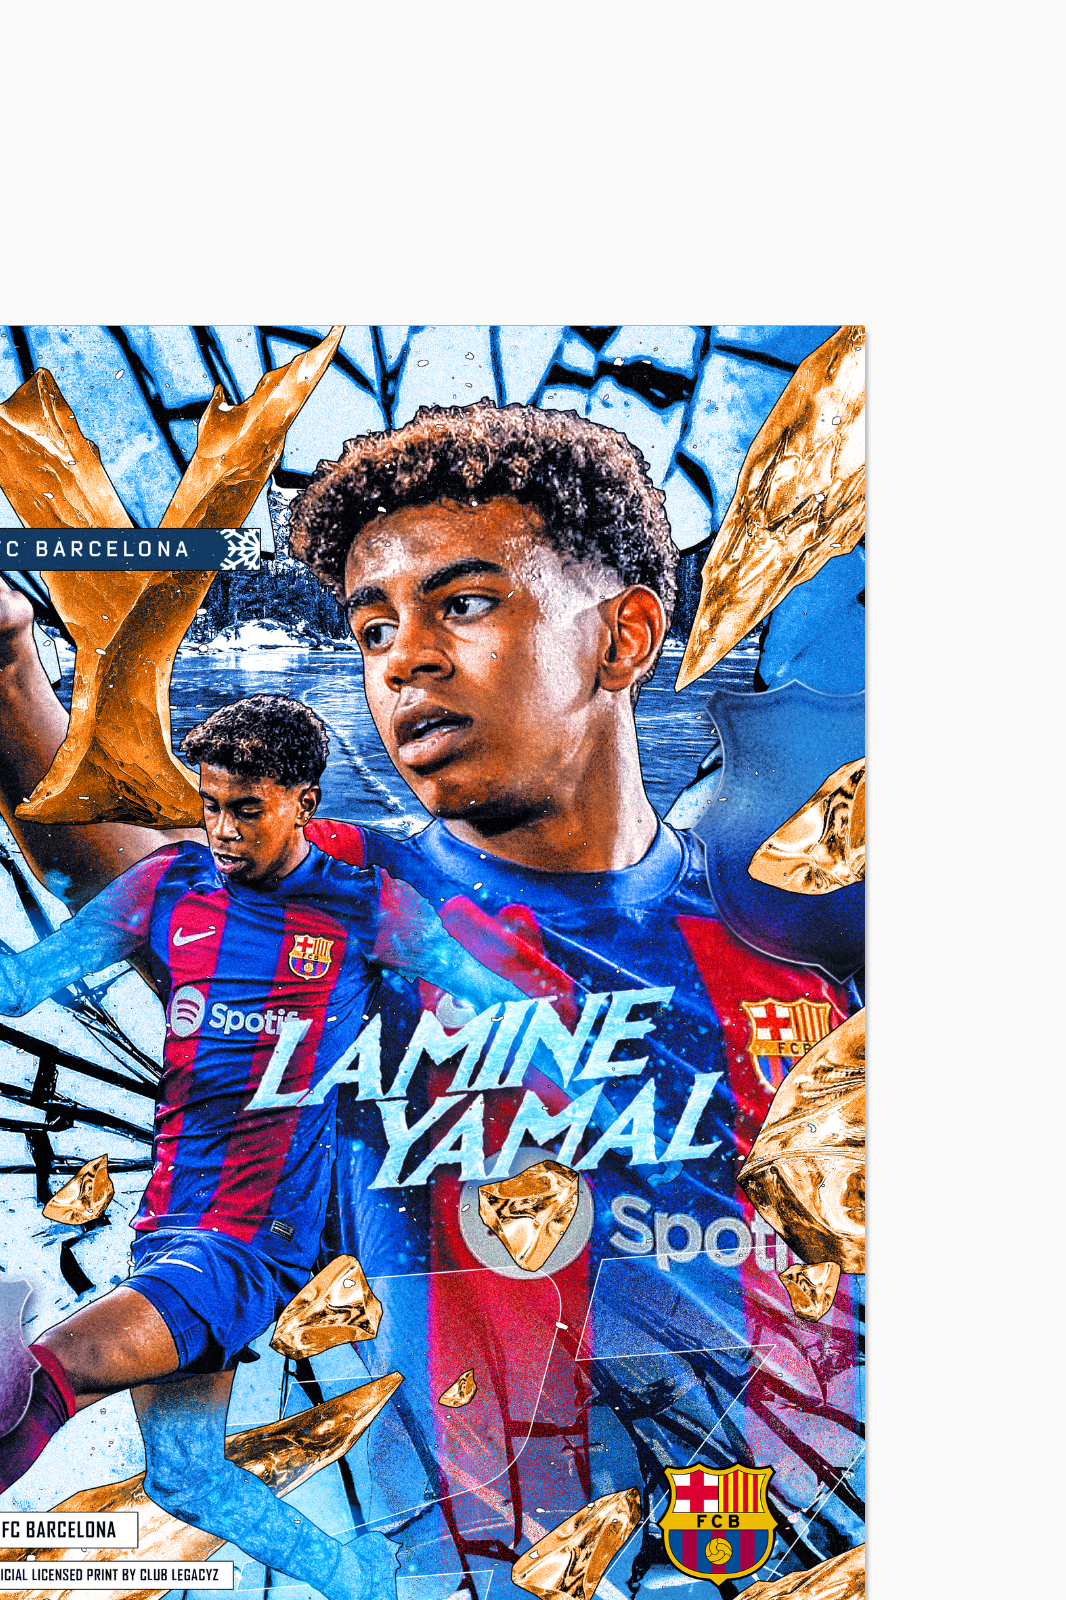 FC Barcelona - Póster Frozen Lamine Yamal 100 ejemplares